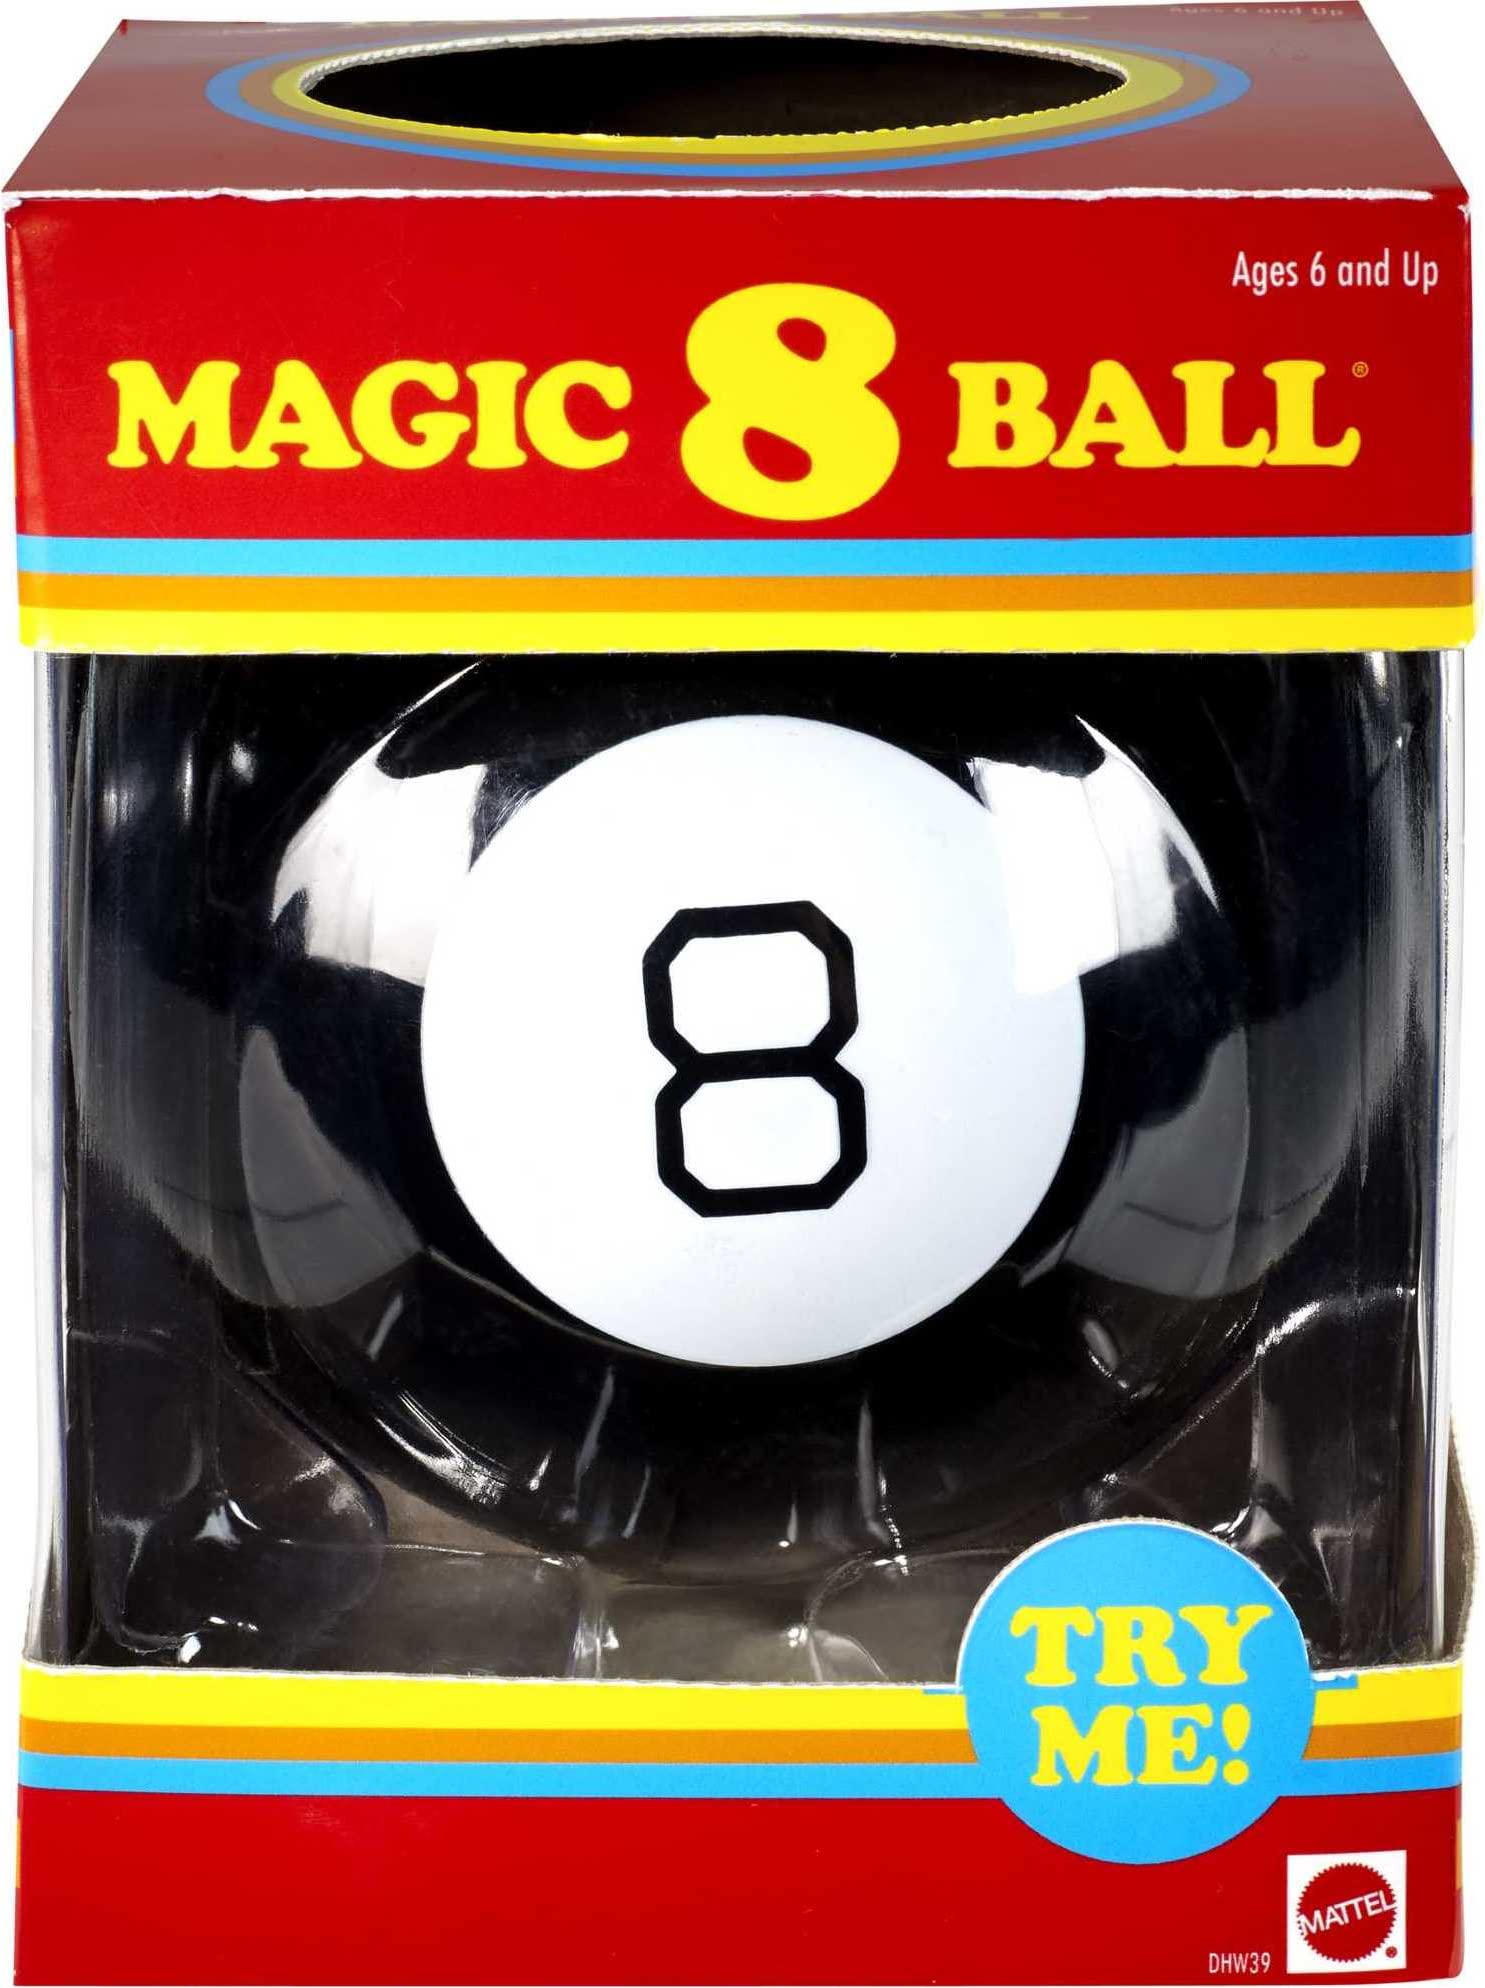 Magic 8 Ball Retro Edition by Mattel